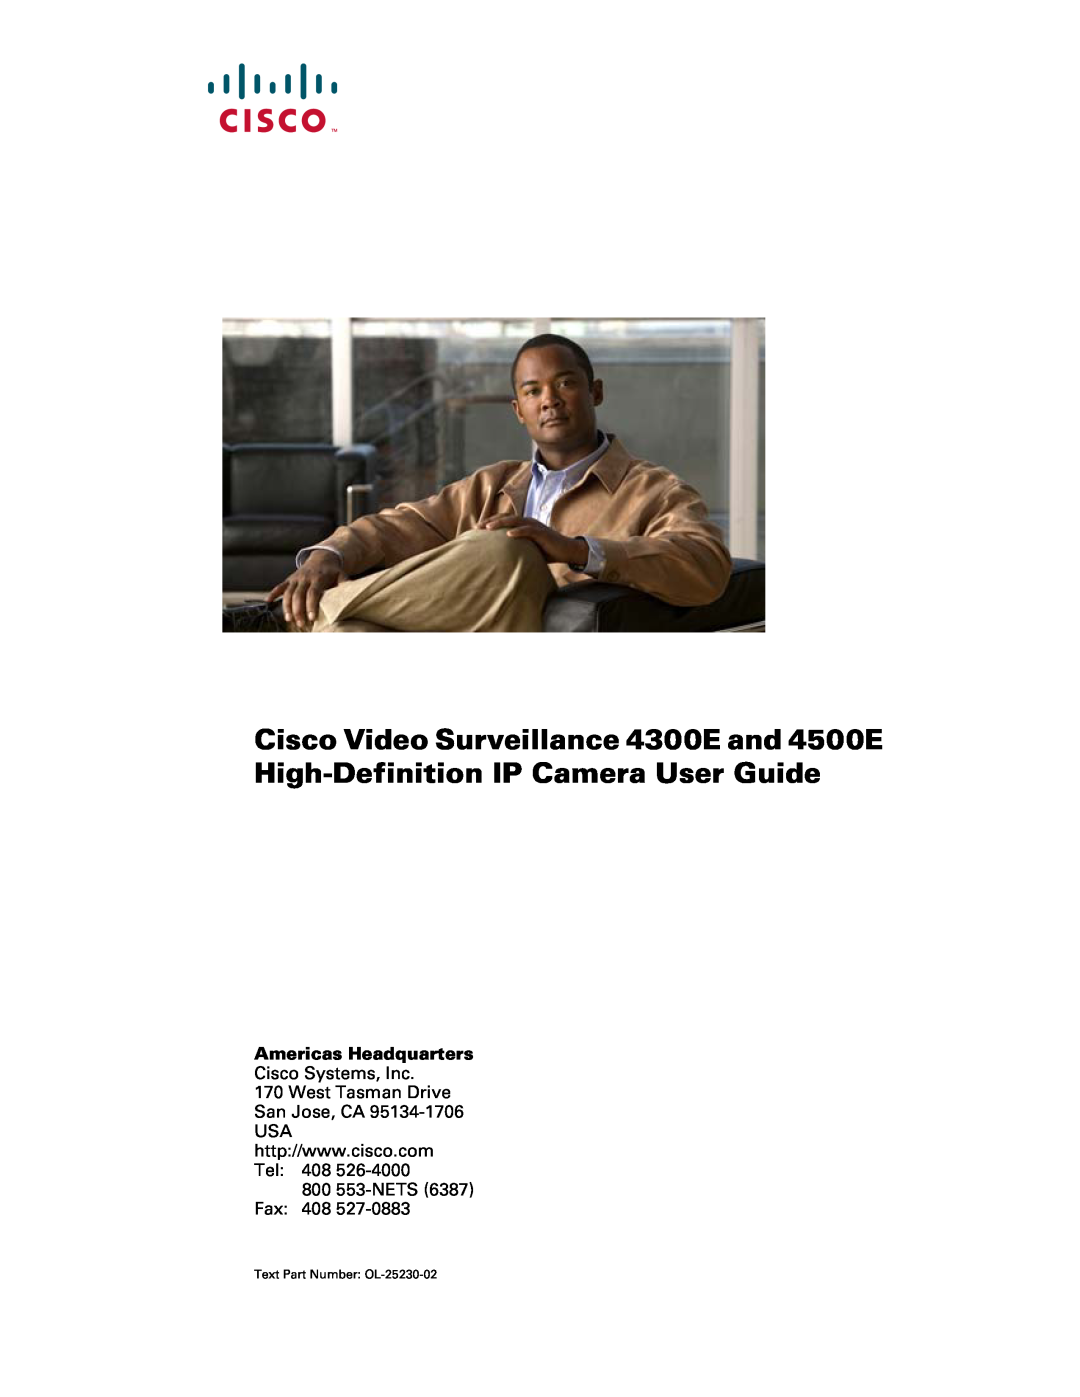 Cisco Systems 4300E manual Cisco Systems, Inc, West Tasman Drive San Jose, CA, Fax, Text Part Number: OL-25230-02 